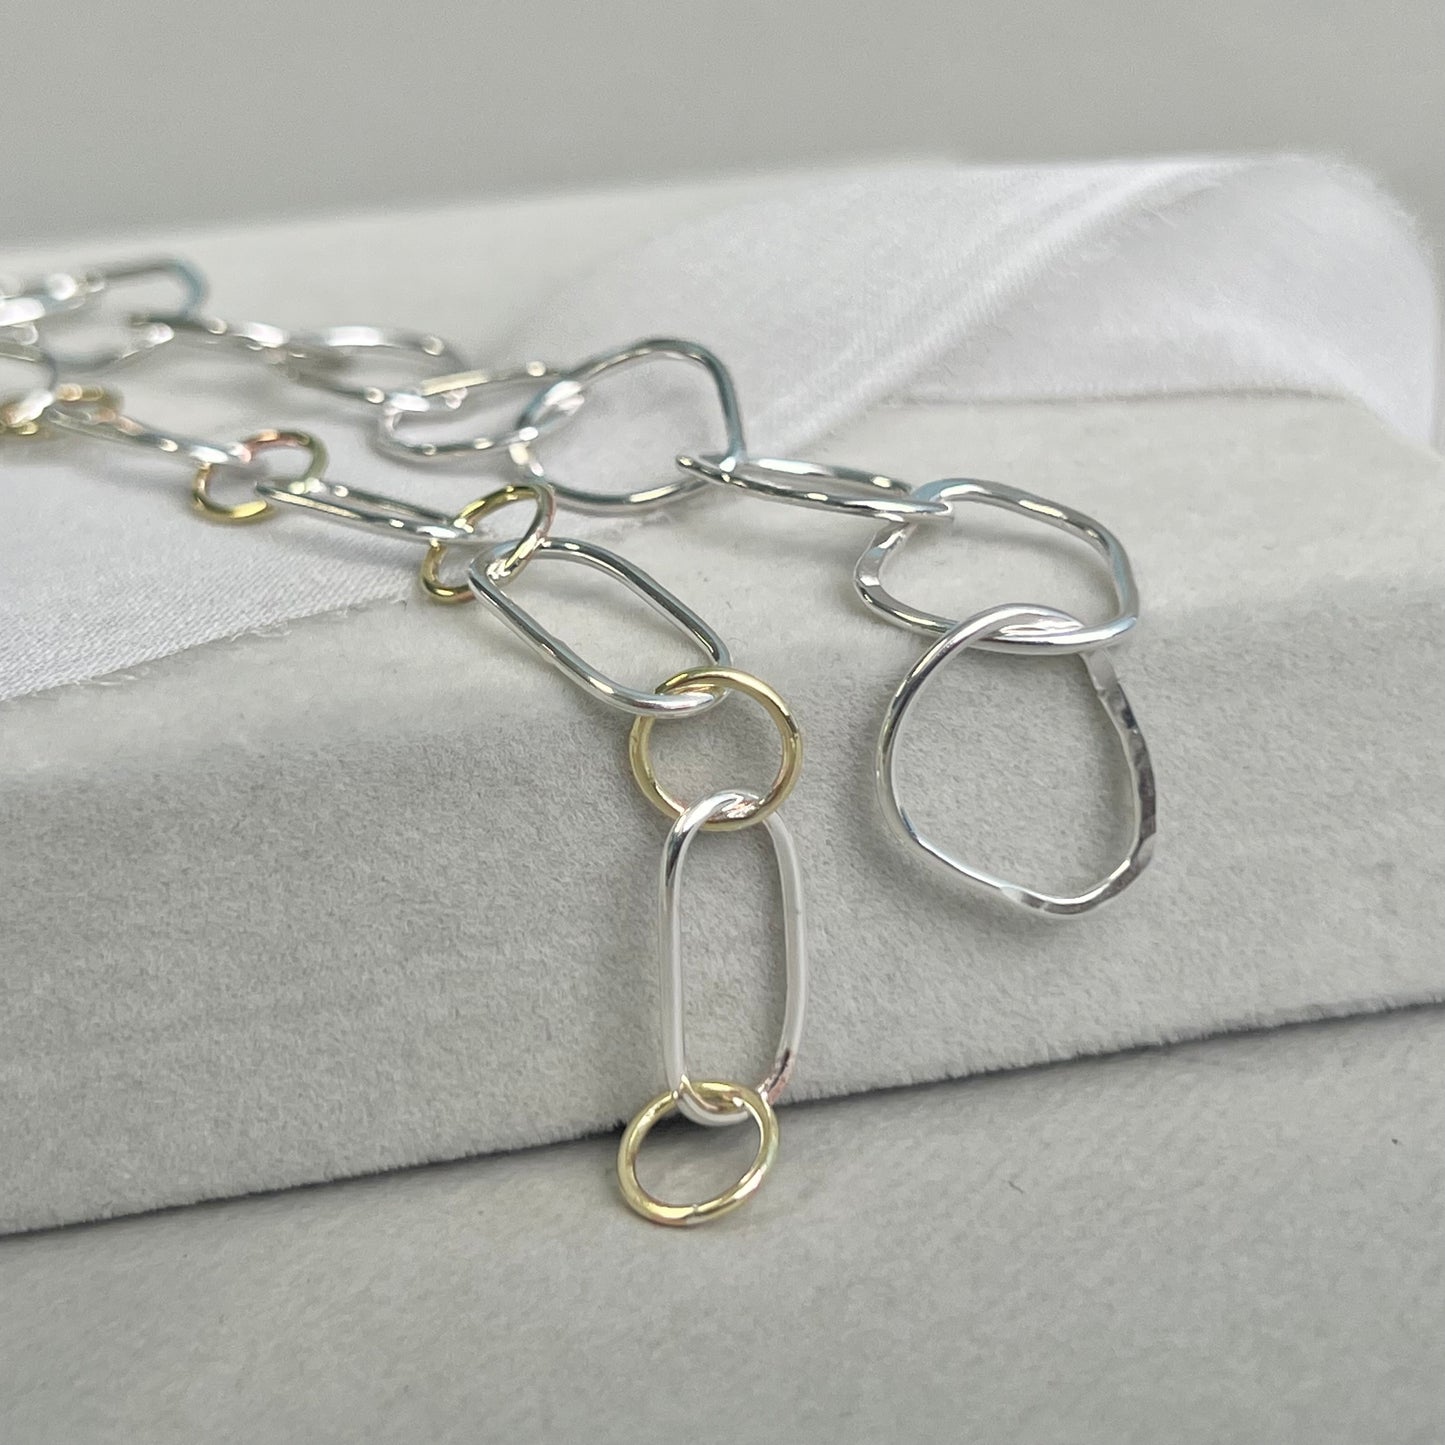 Handmade Chain Link Bracelet - Friday 11th October 10-2:30pm